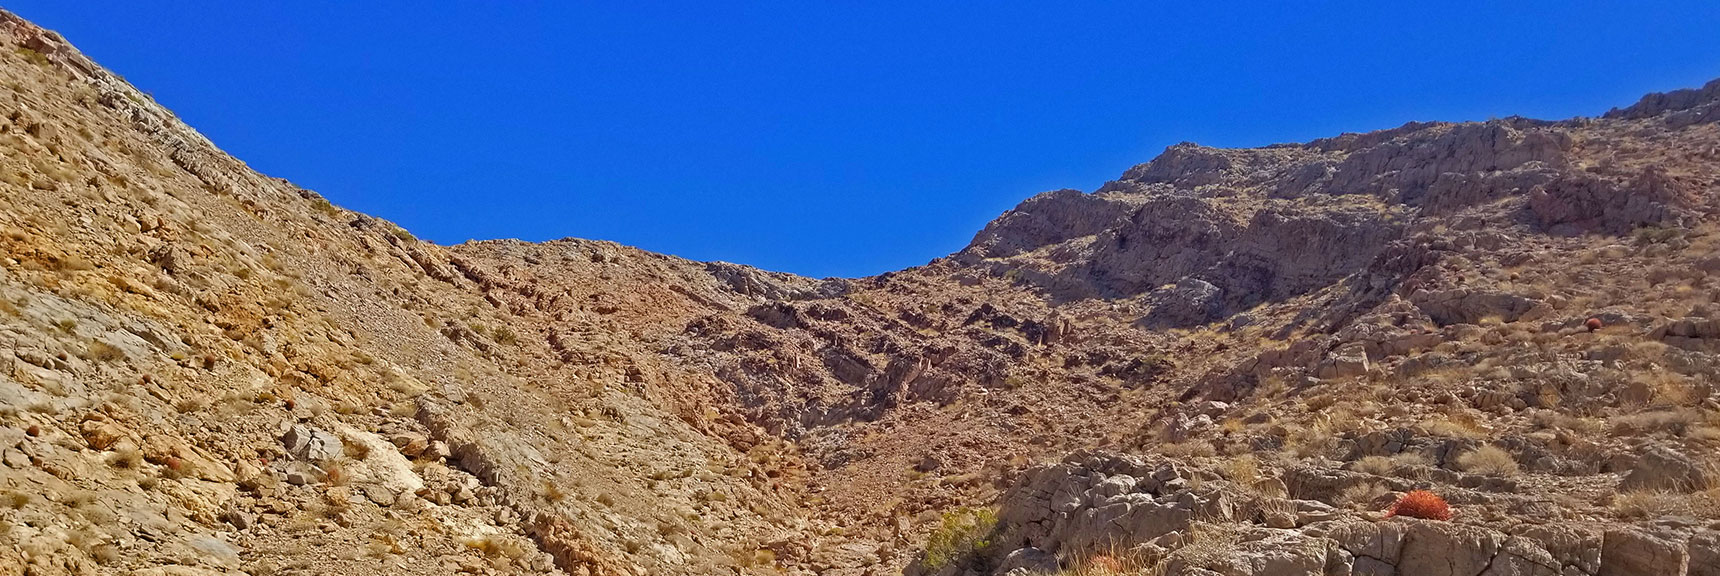 Nearing Summit of Cairn Wash | Sunrise Mountain, Las Vegas, Nevada